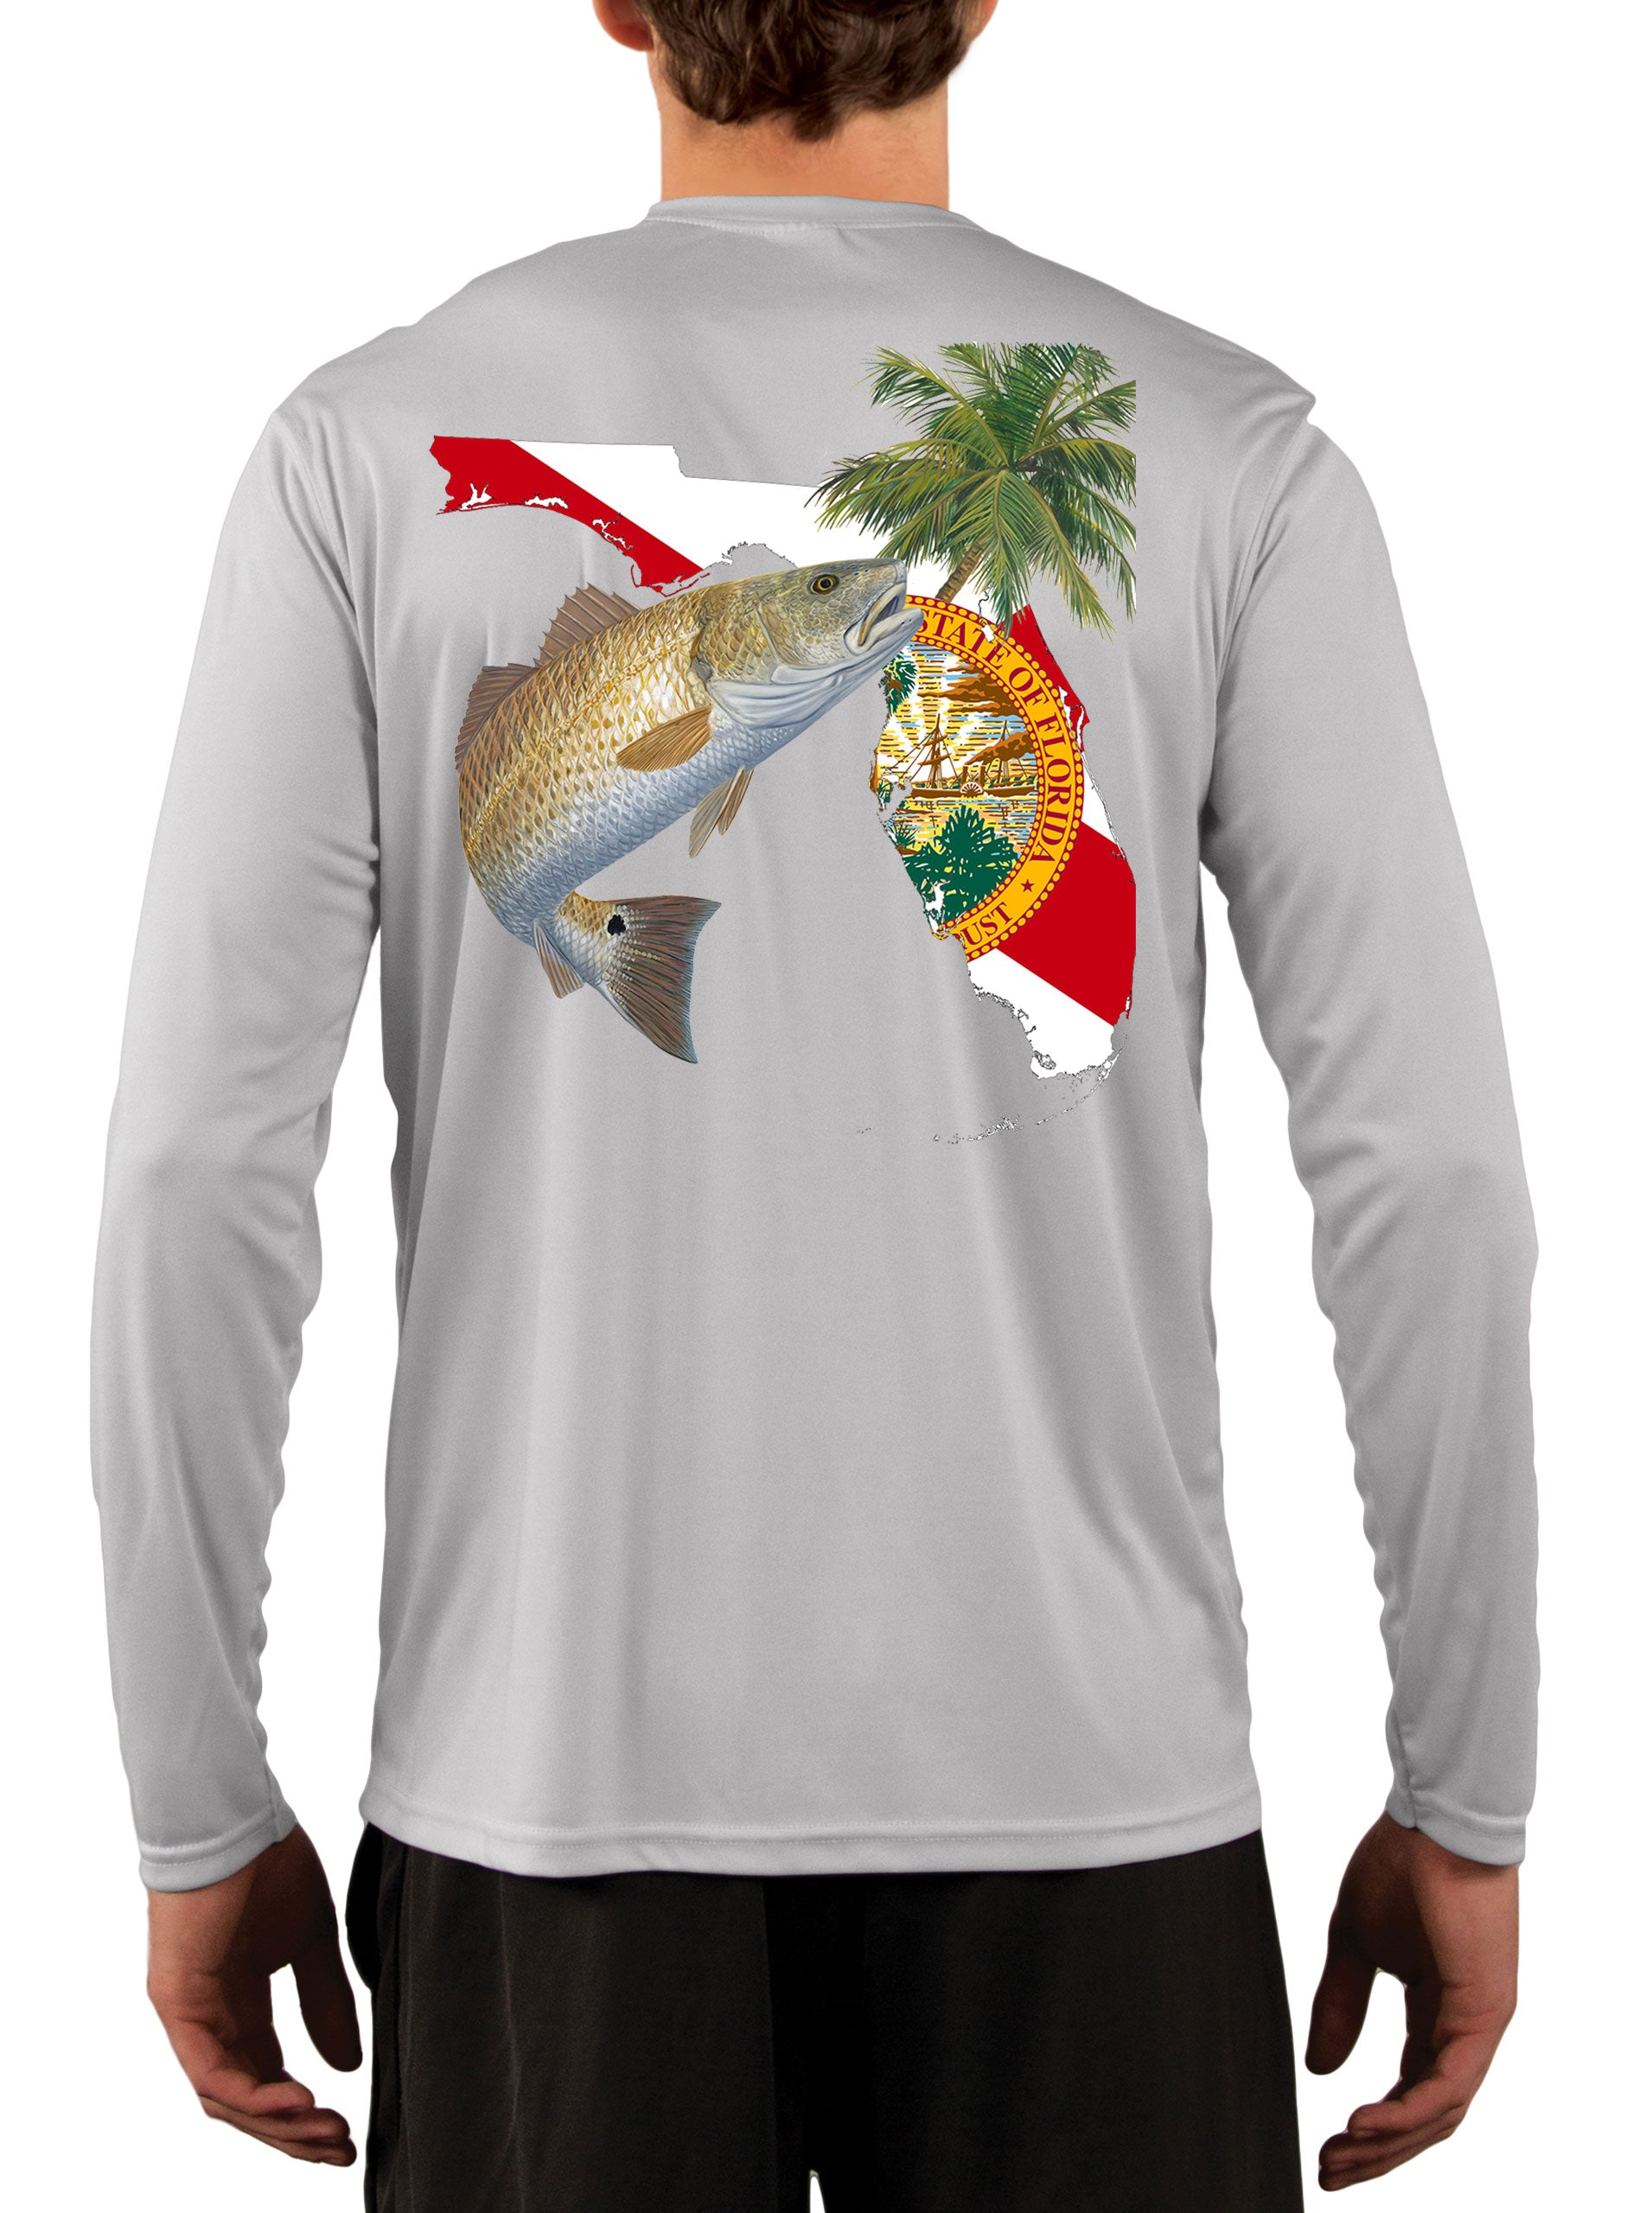 [New Artwork] Redfish Florida Fishing Shirt with Florida State Flag Sleeve Small / Pearl Gray